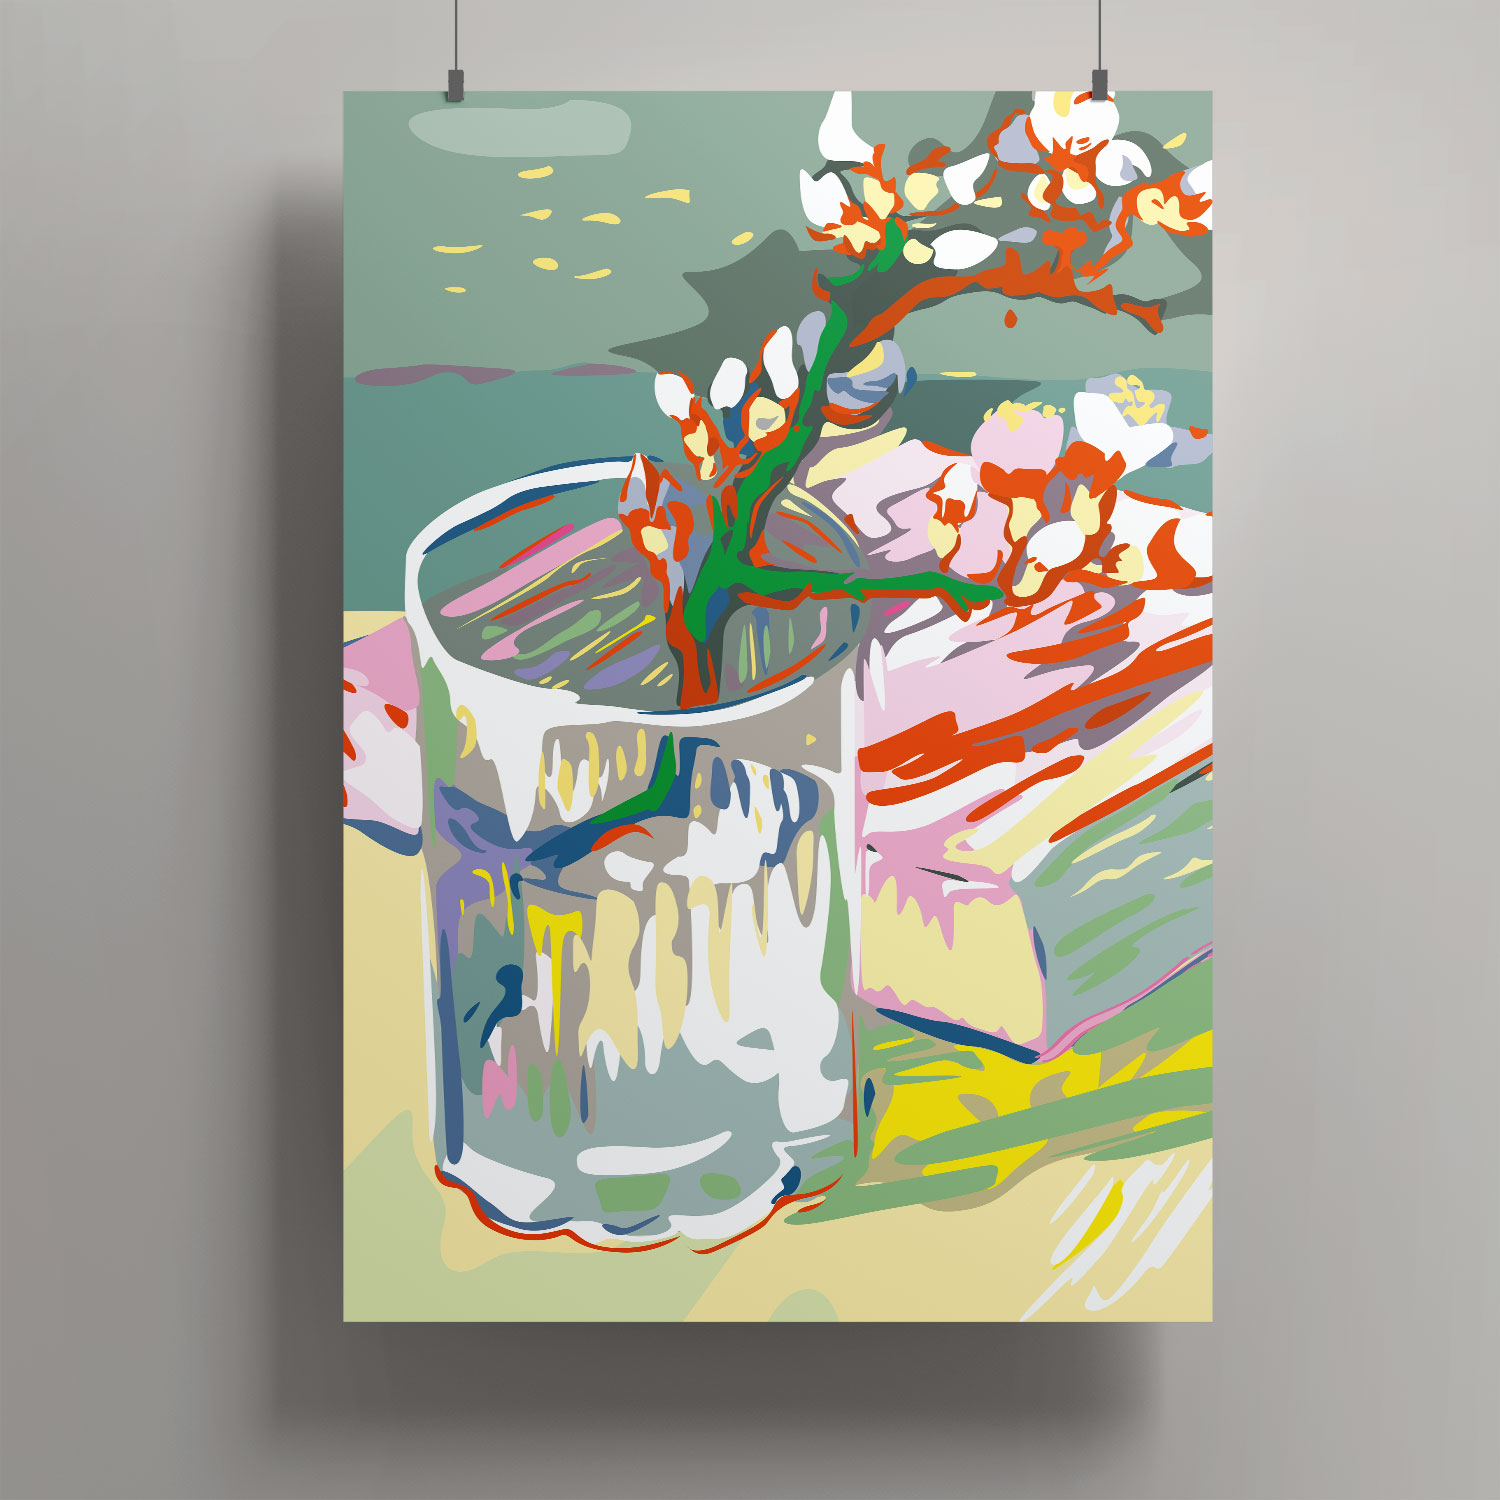 Artprint A3 - Blossoming Almond in a Glass, van Gogh